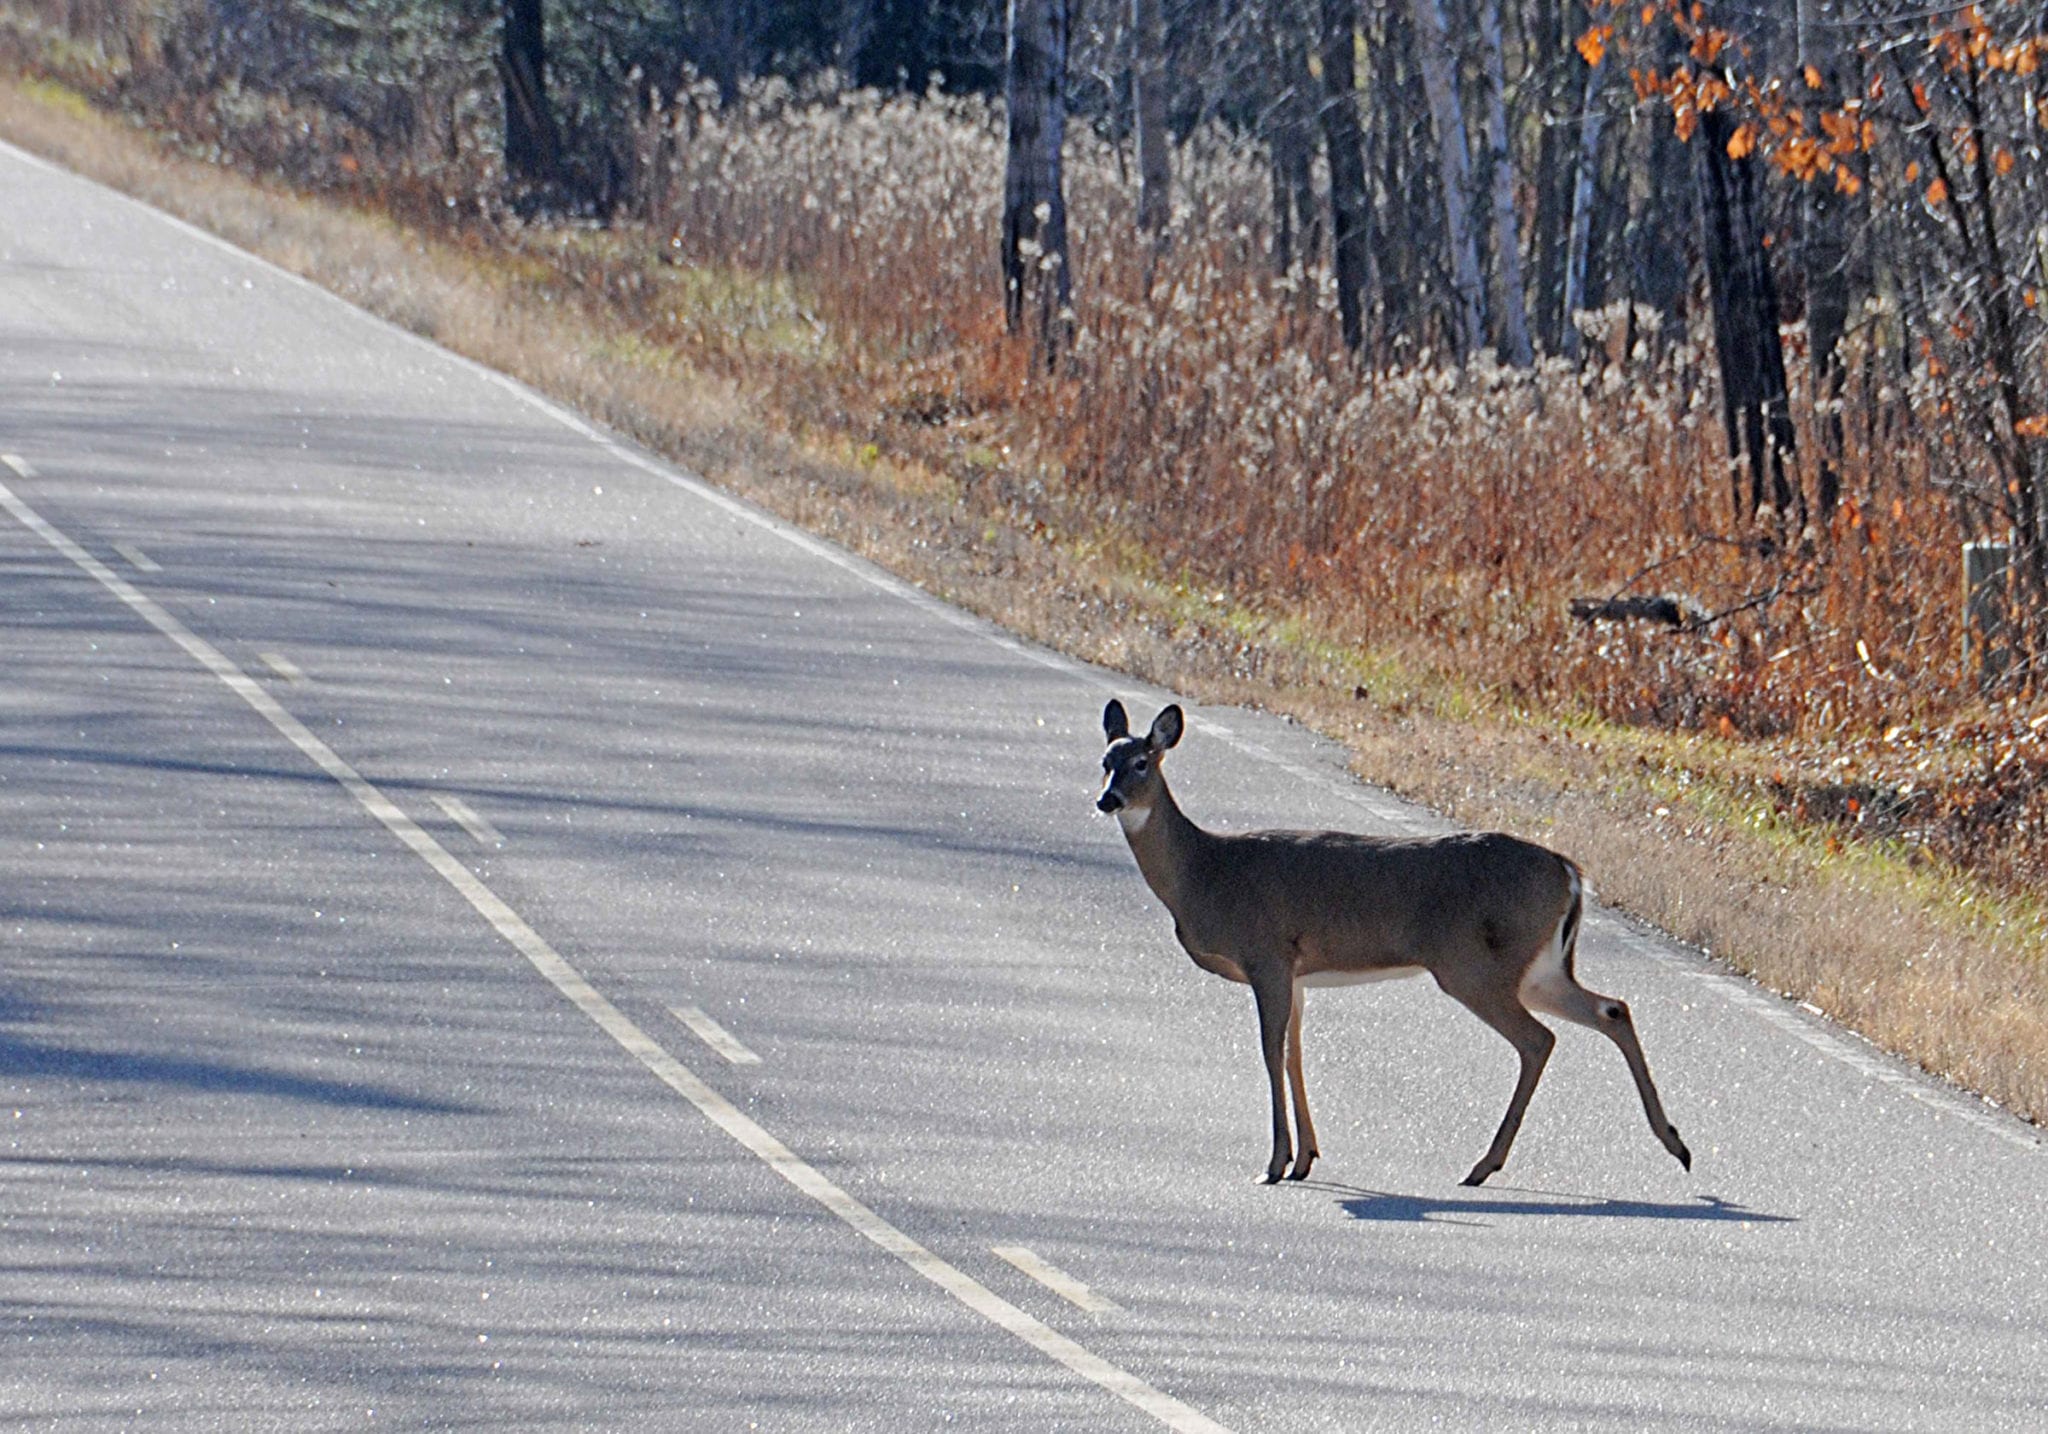 deer-vehicle collision